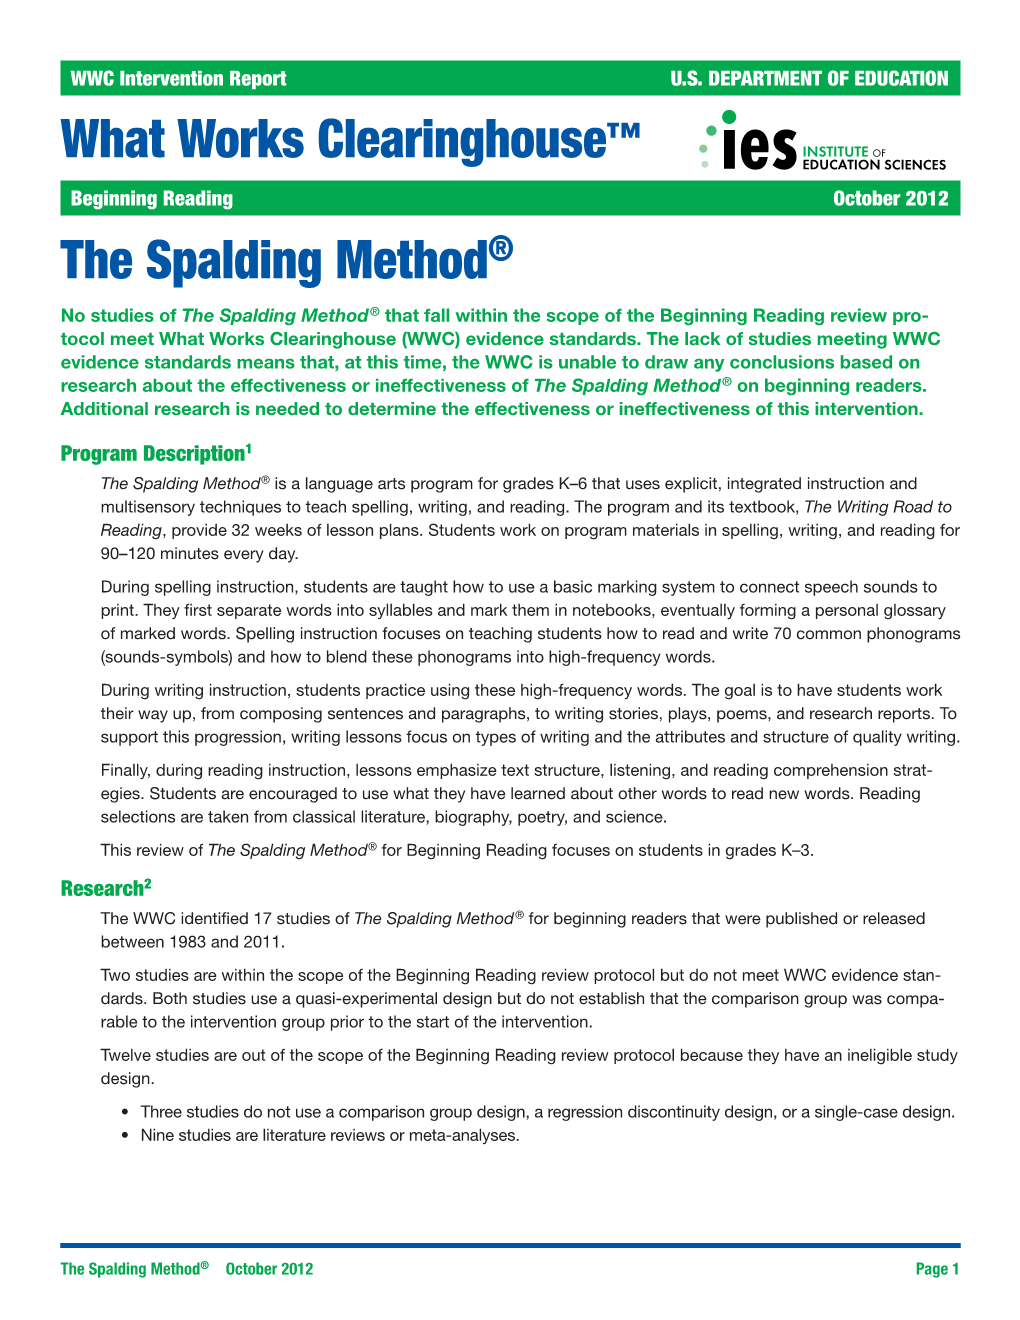 The Spalding Method®